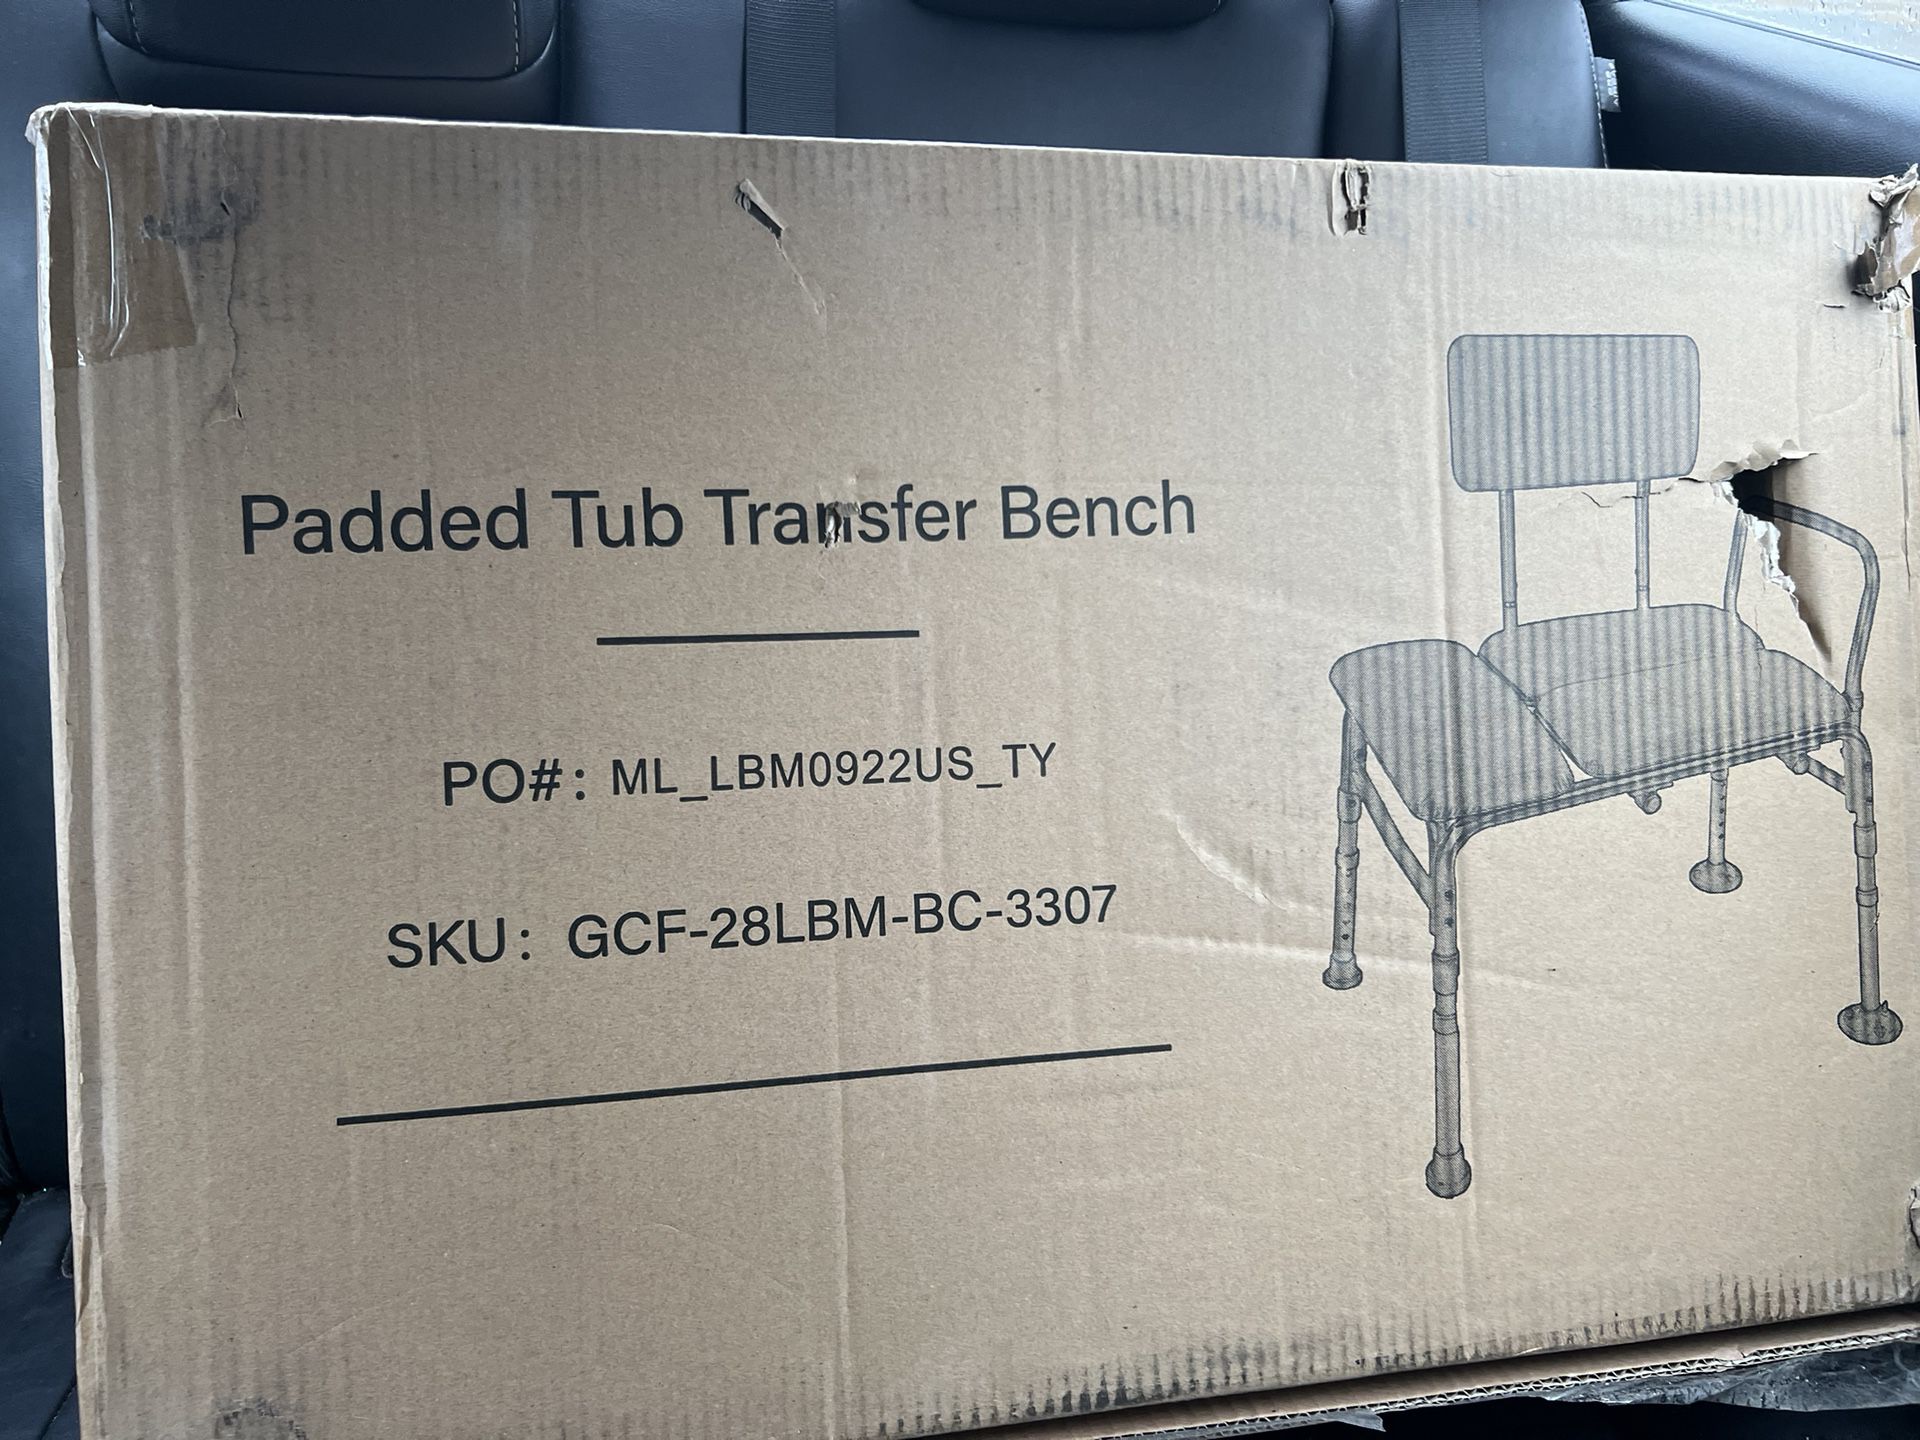 Padded Tub Transfer Bench